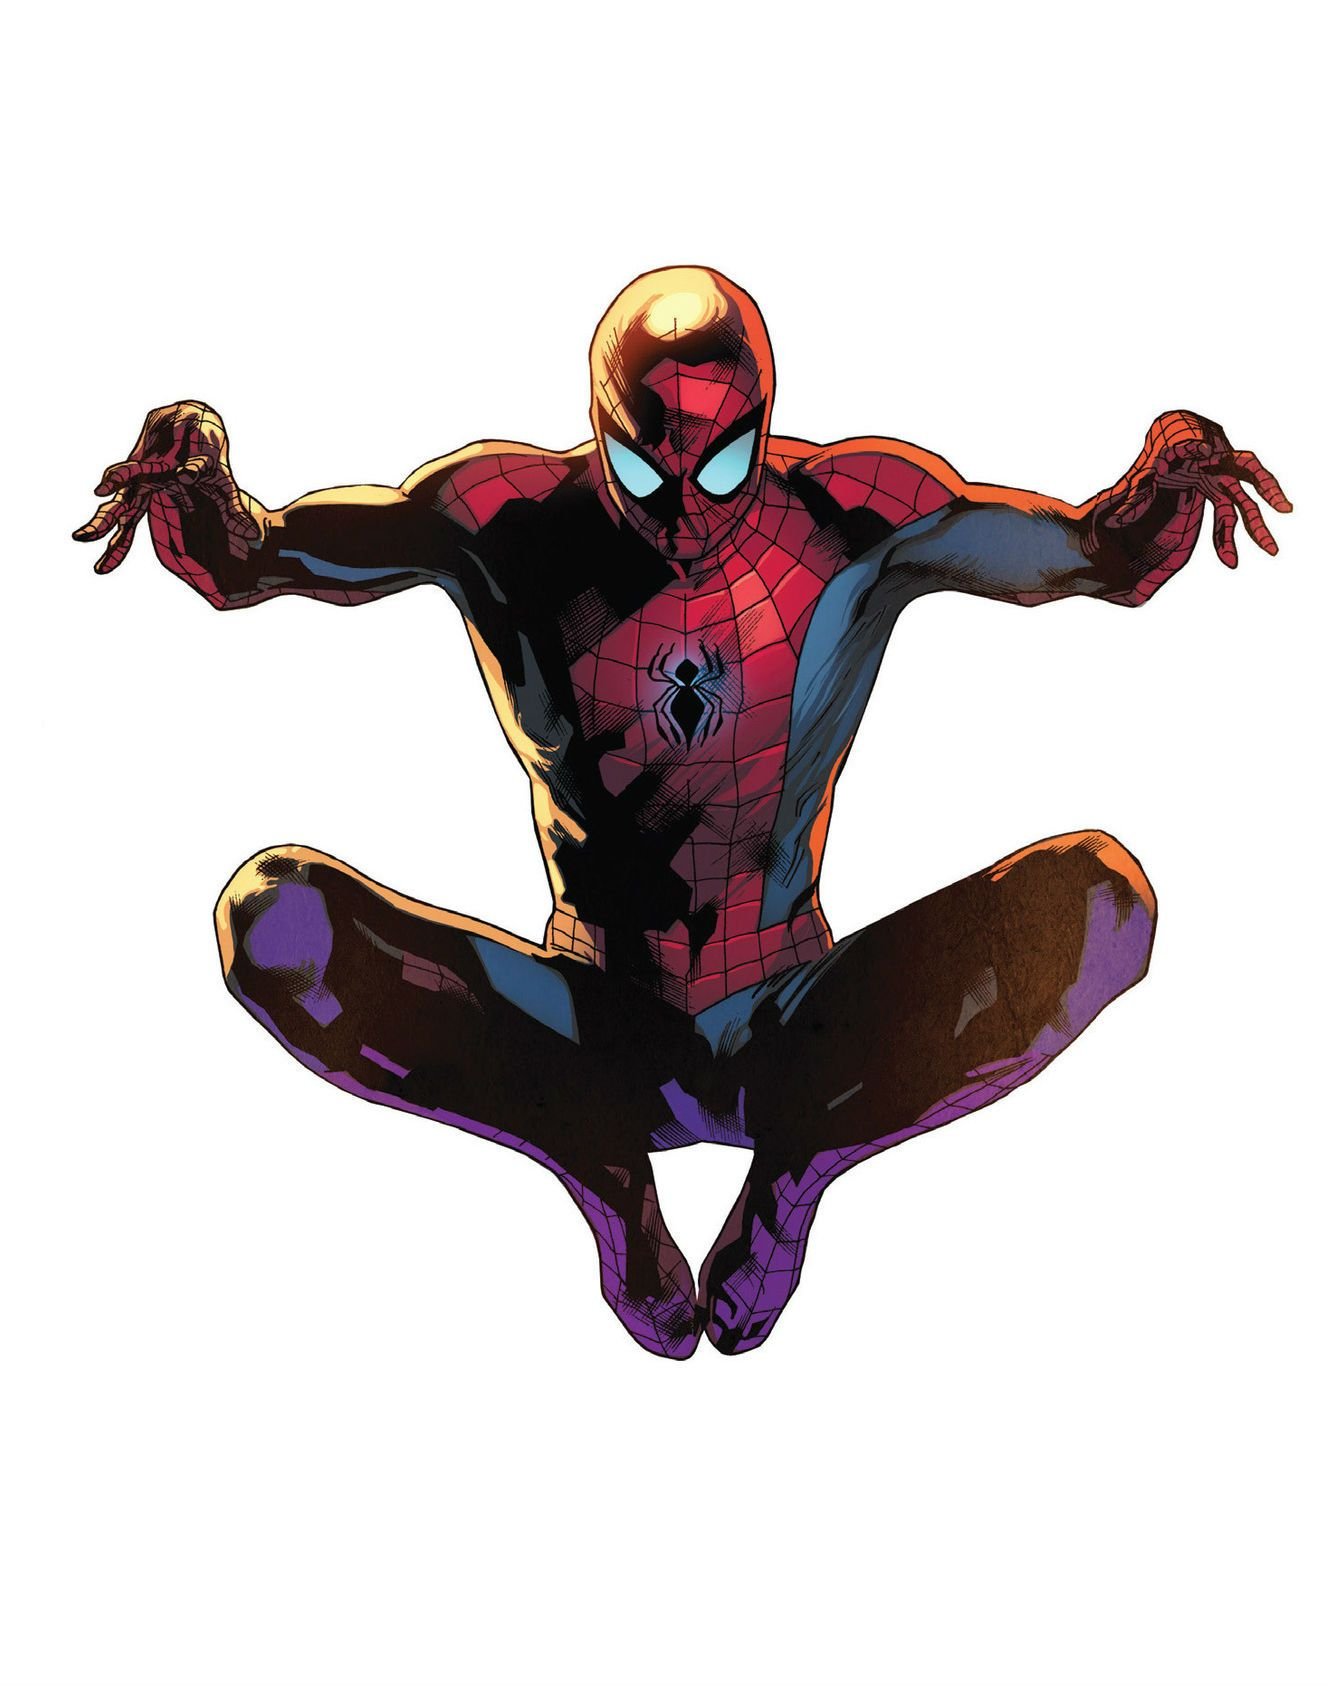 Spiderman Animated Series Wallpaper